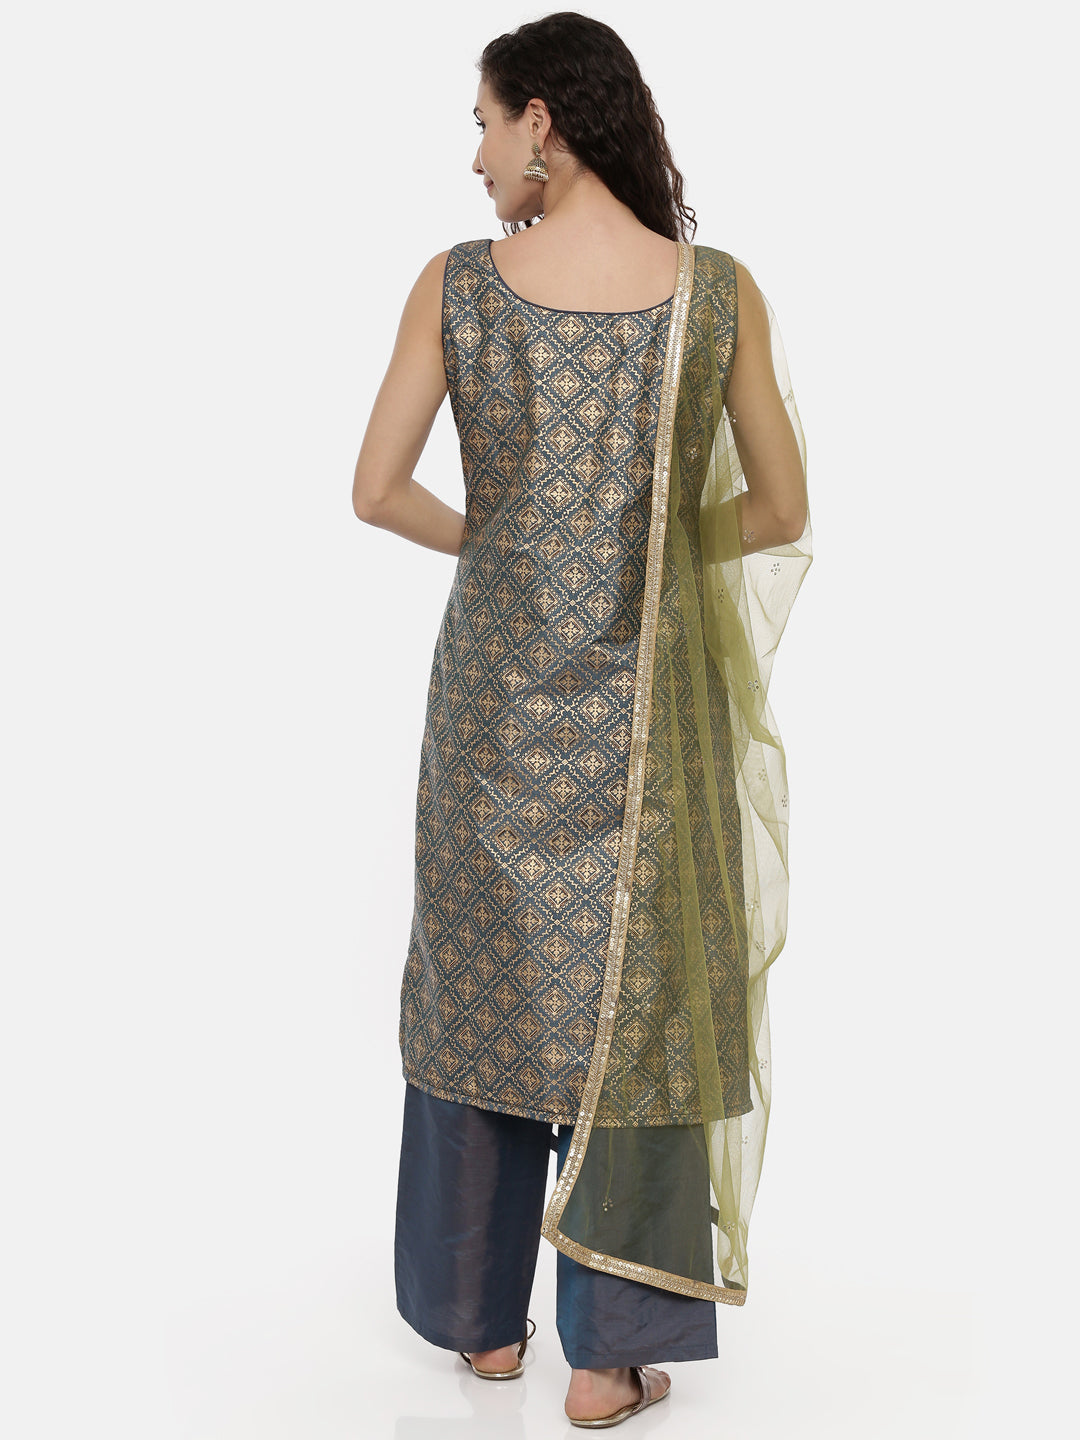 Neeru's Teal Color Printed Fabric Suit-Pant